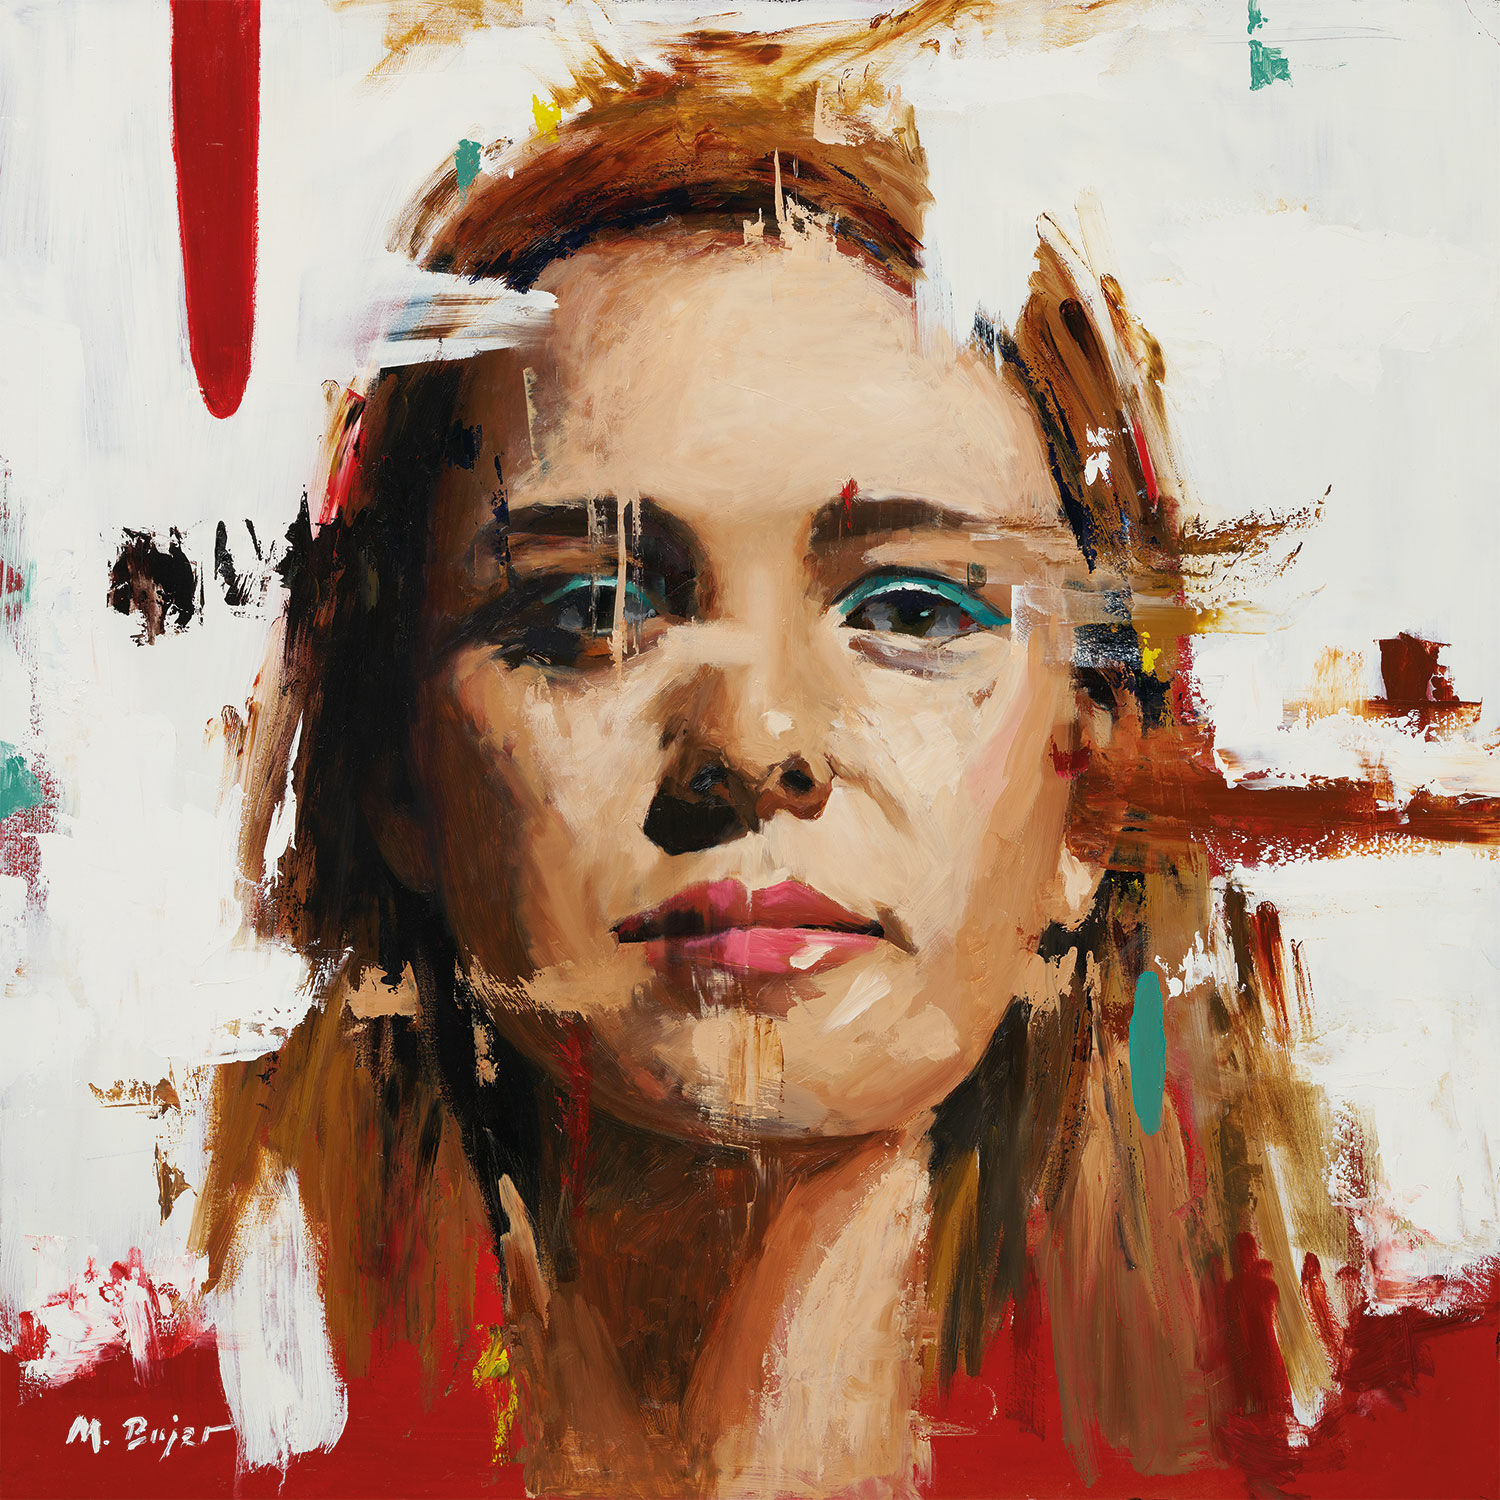 Beeld "Disrupted Portrait, No. 19" (2021) von Michael Bajer